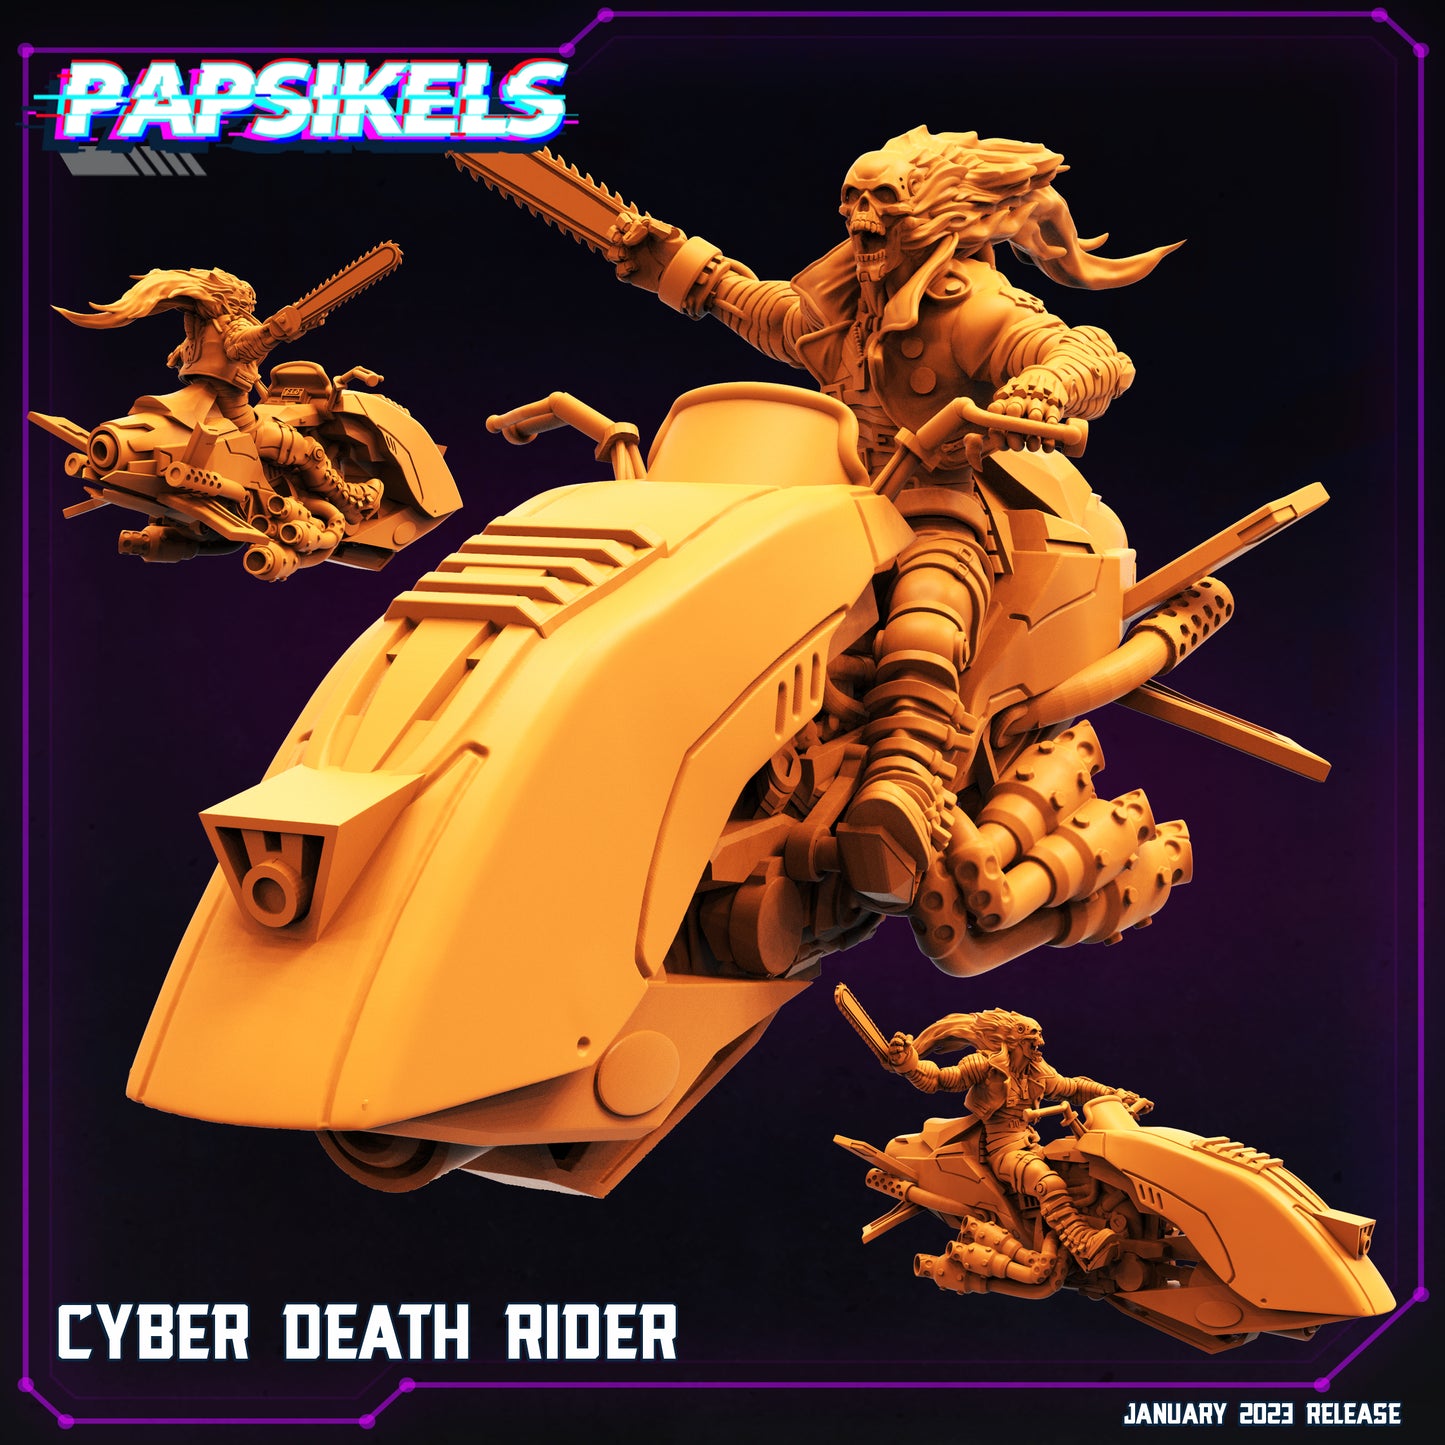 Cyber death rider